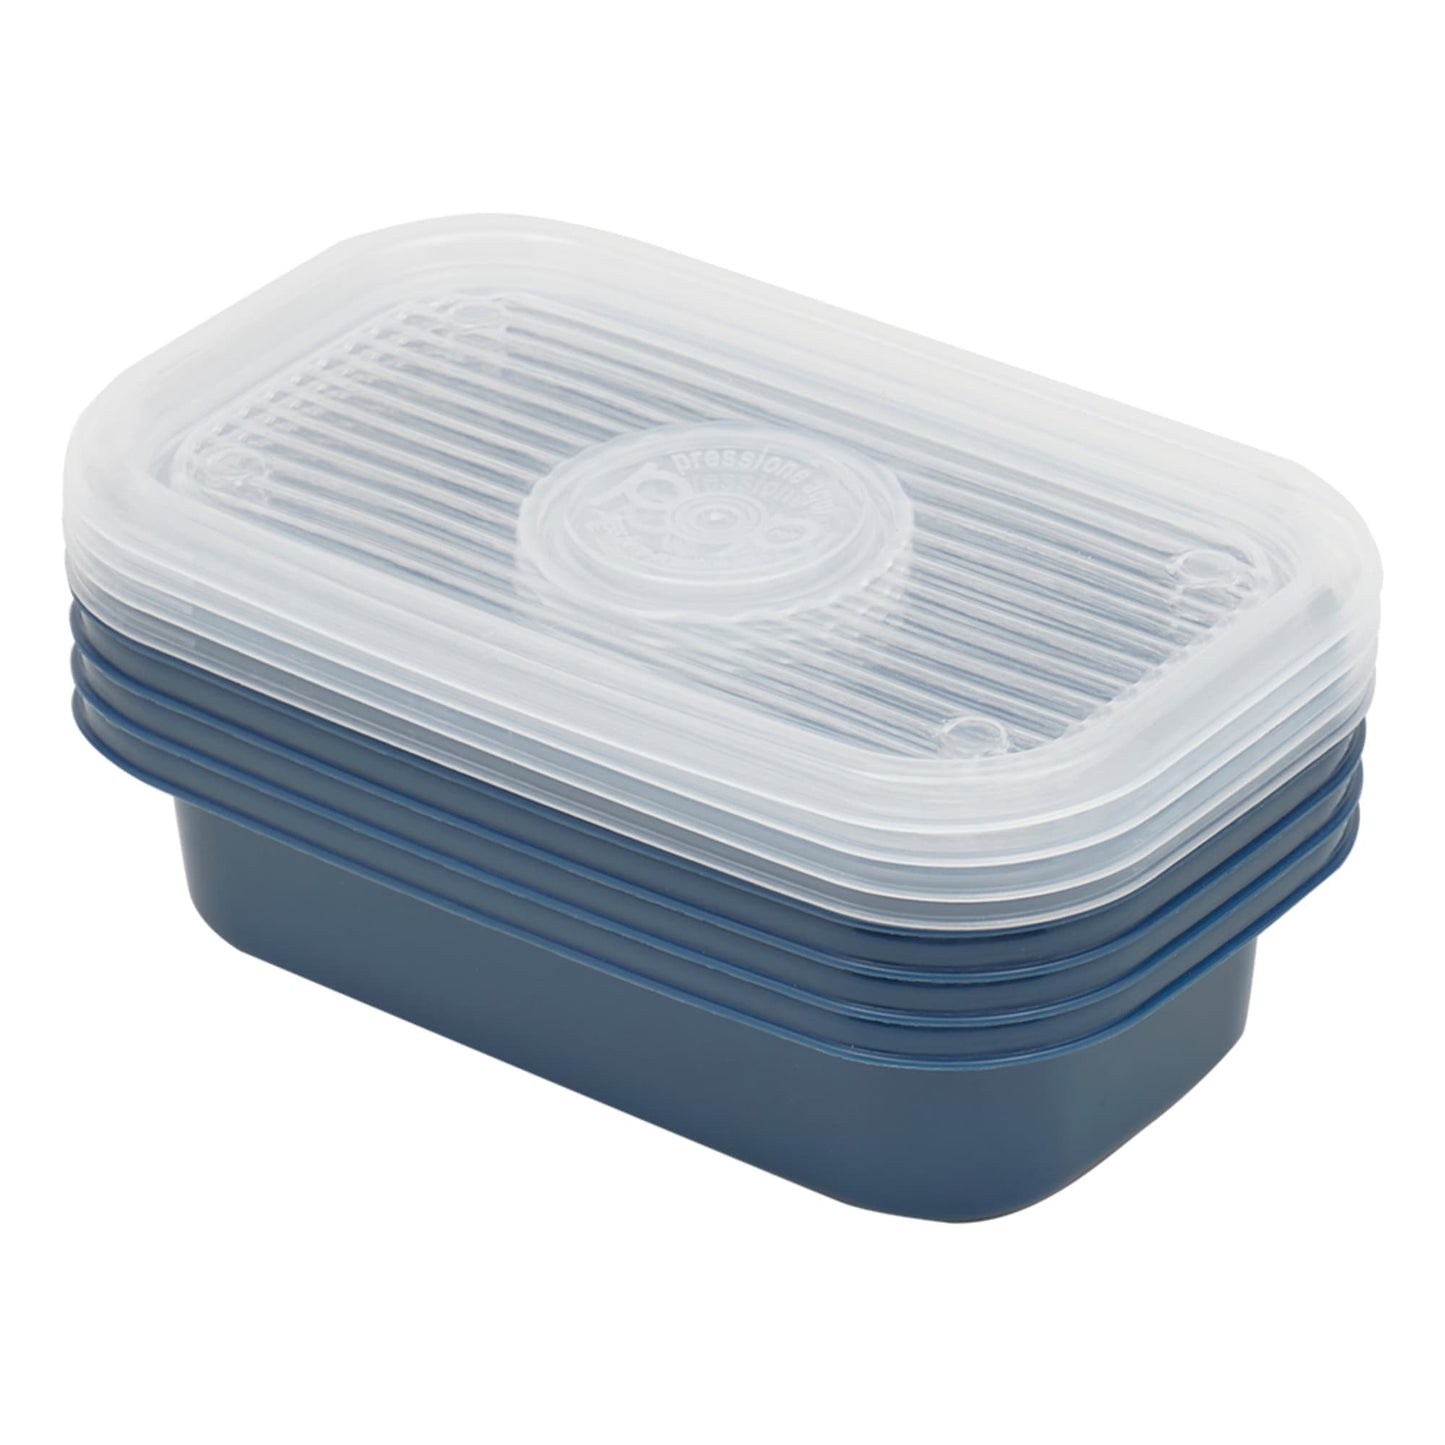 8 Piece Rectangular Plastic Meal Prep Set, (17.6 oz), Blue